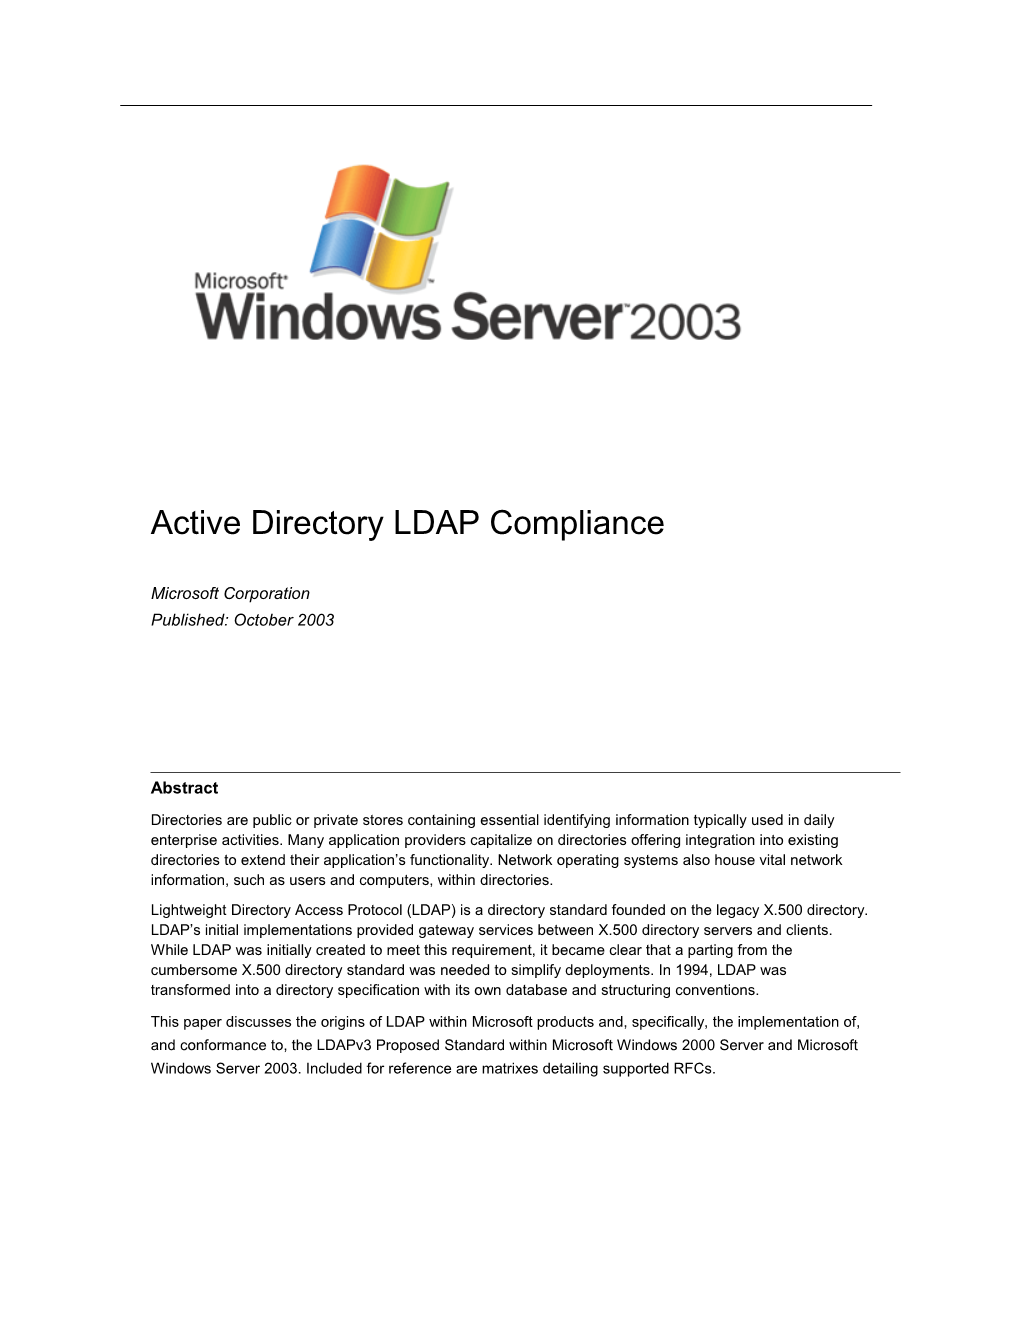 Active Directory's LDAP Compliance